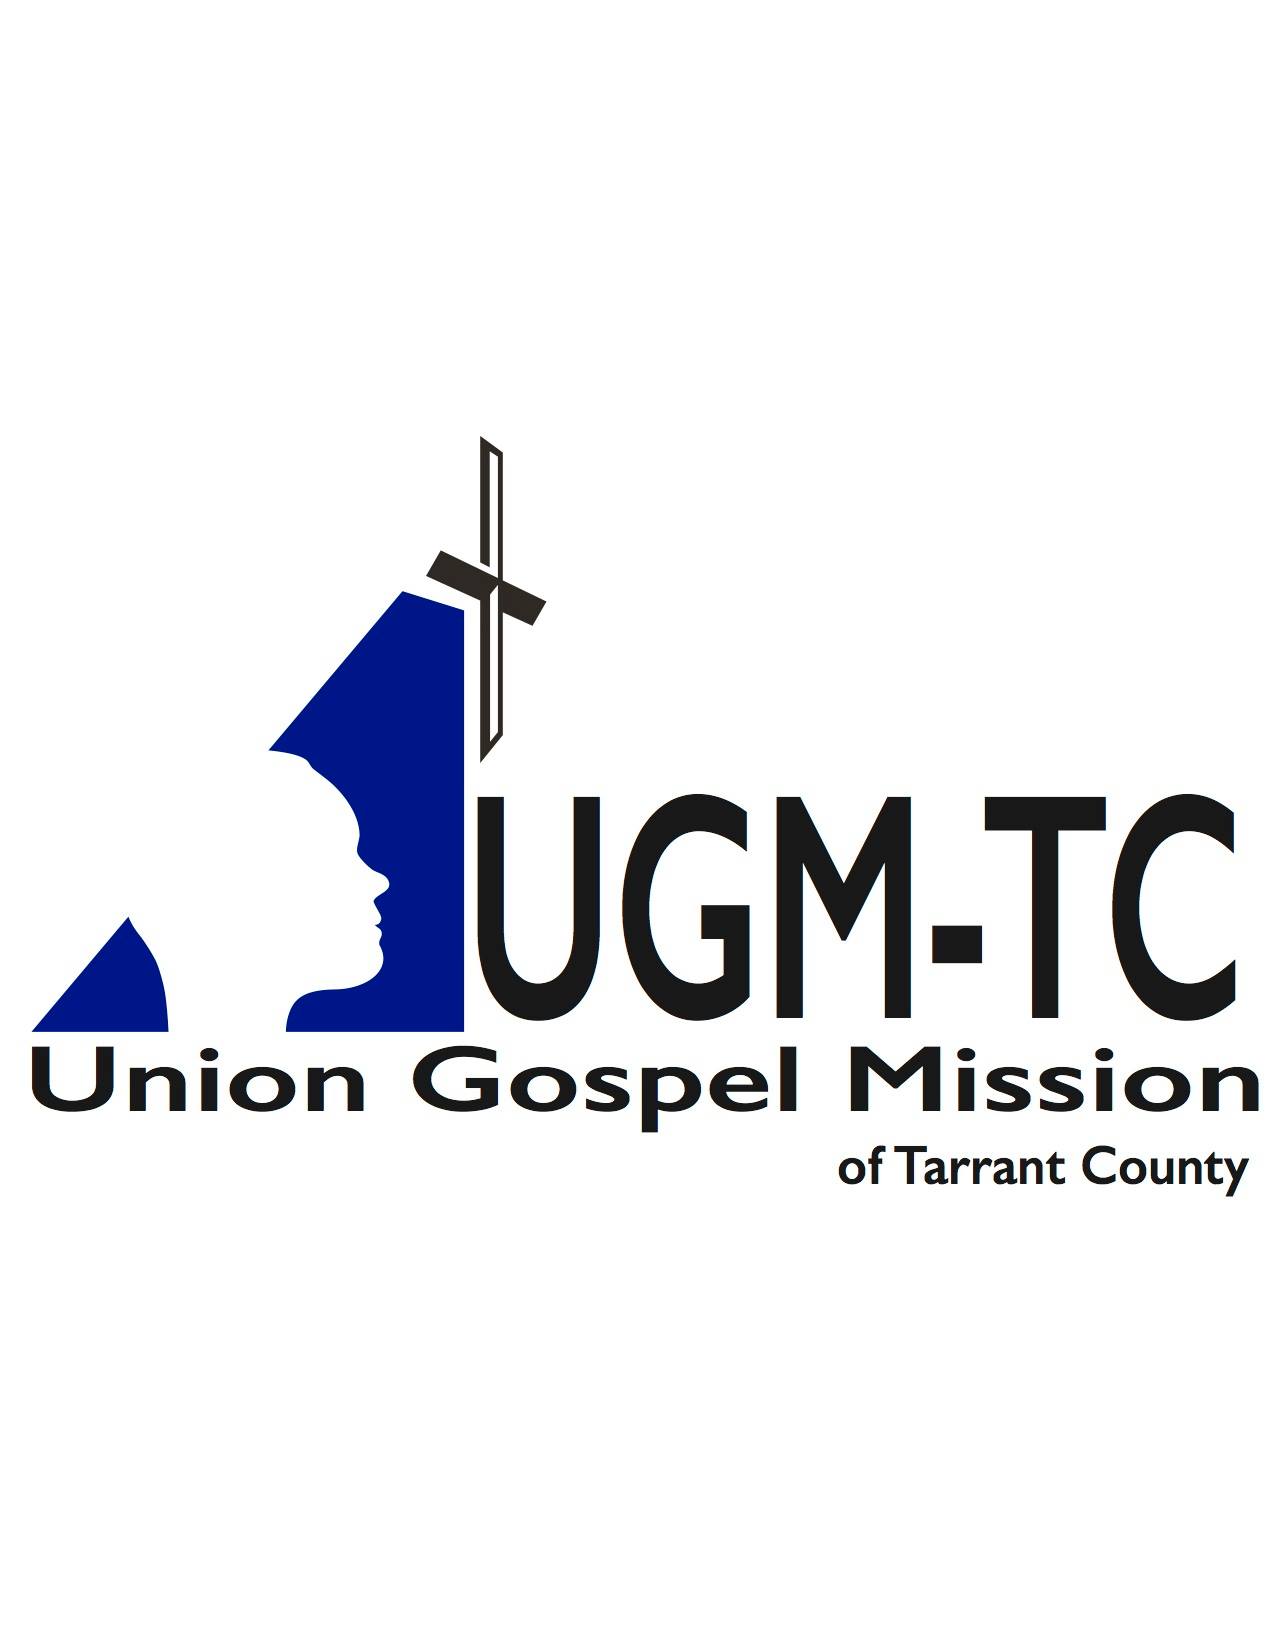 Union Gospel Mission of Tarrant County